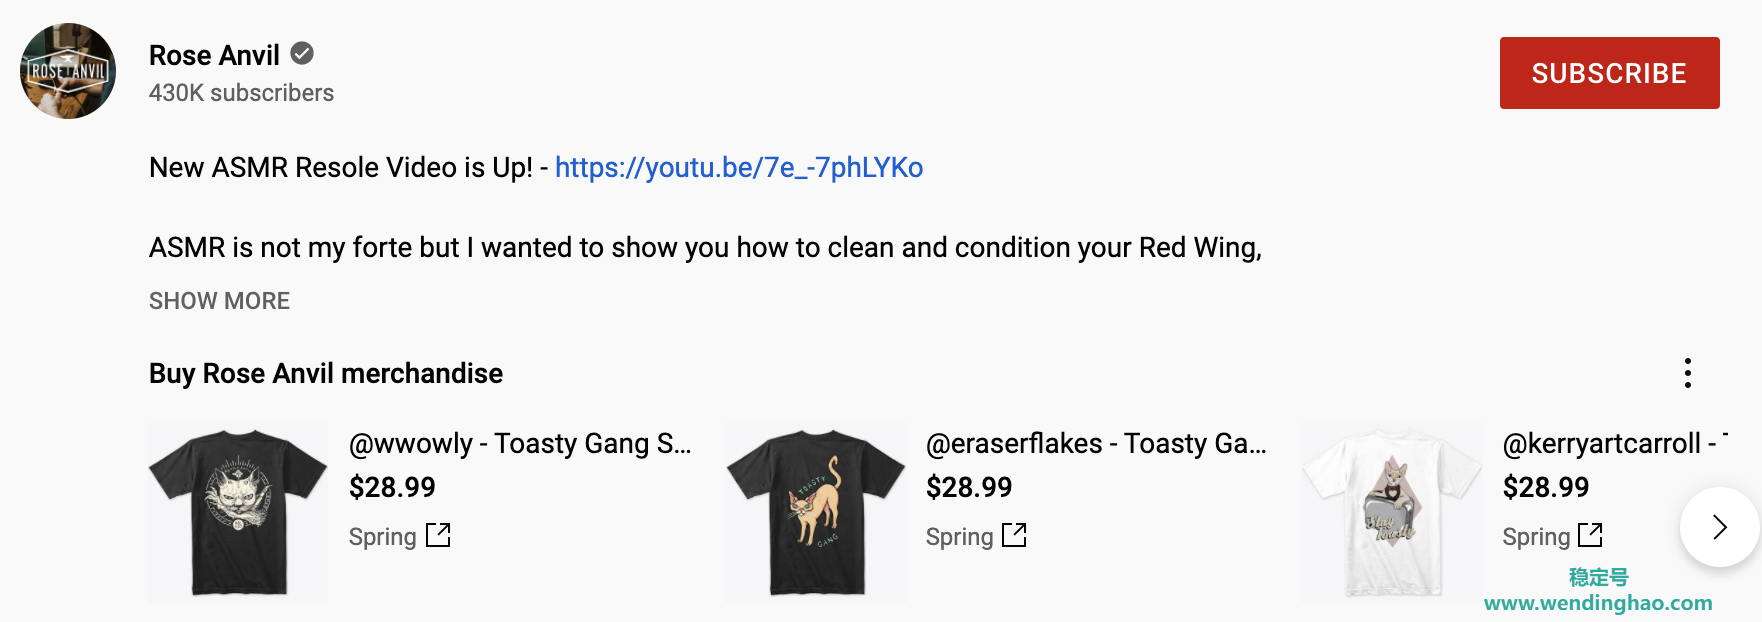 YouTube 频道 Rose Anvil 使用商品作为在 YouTube 上获利的方式的示例。